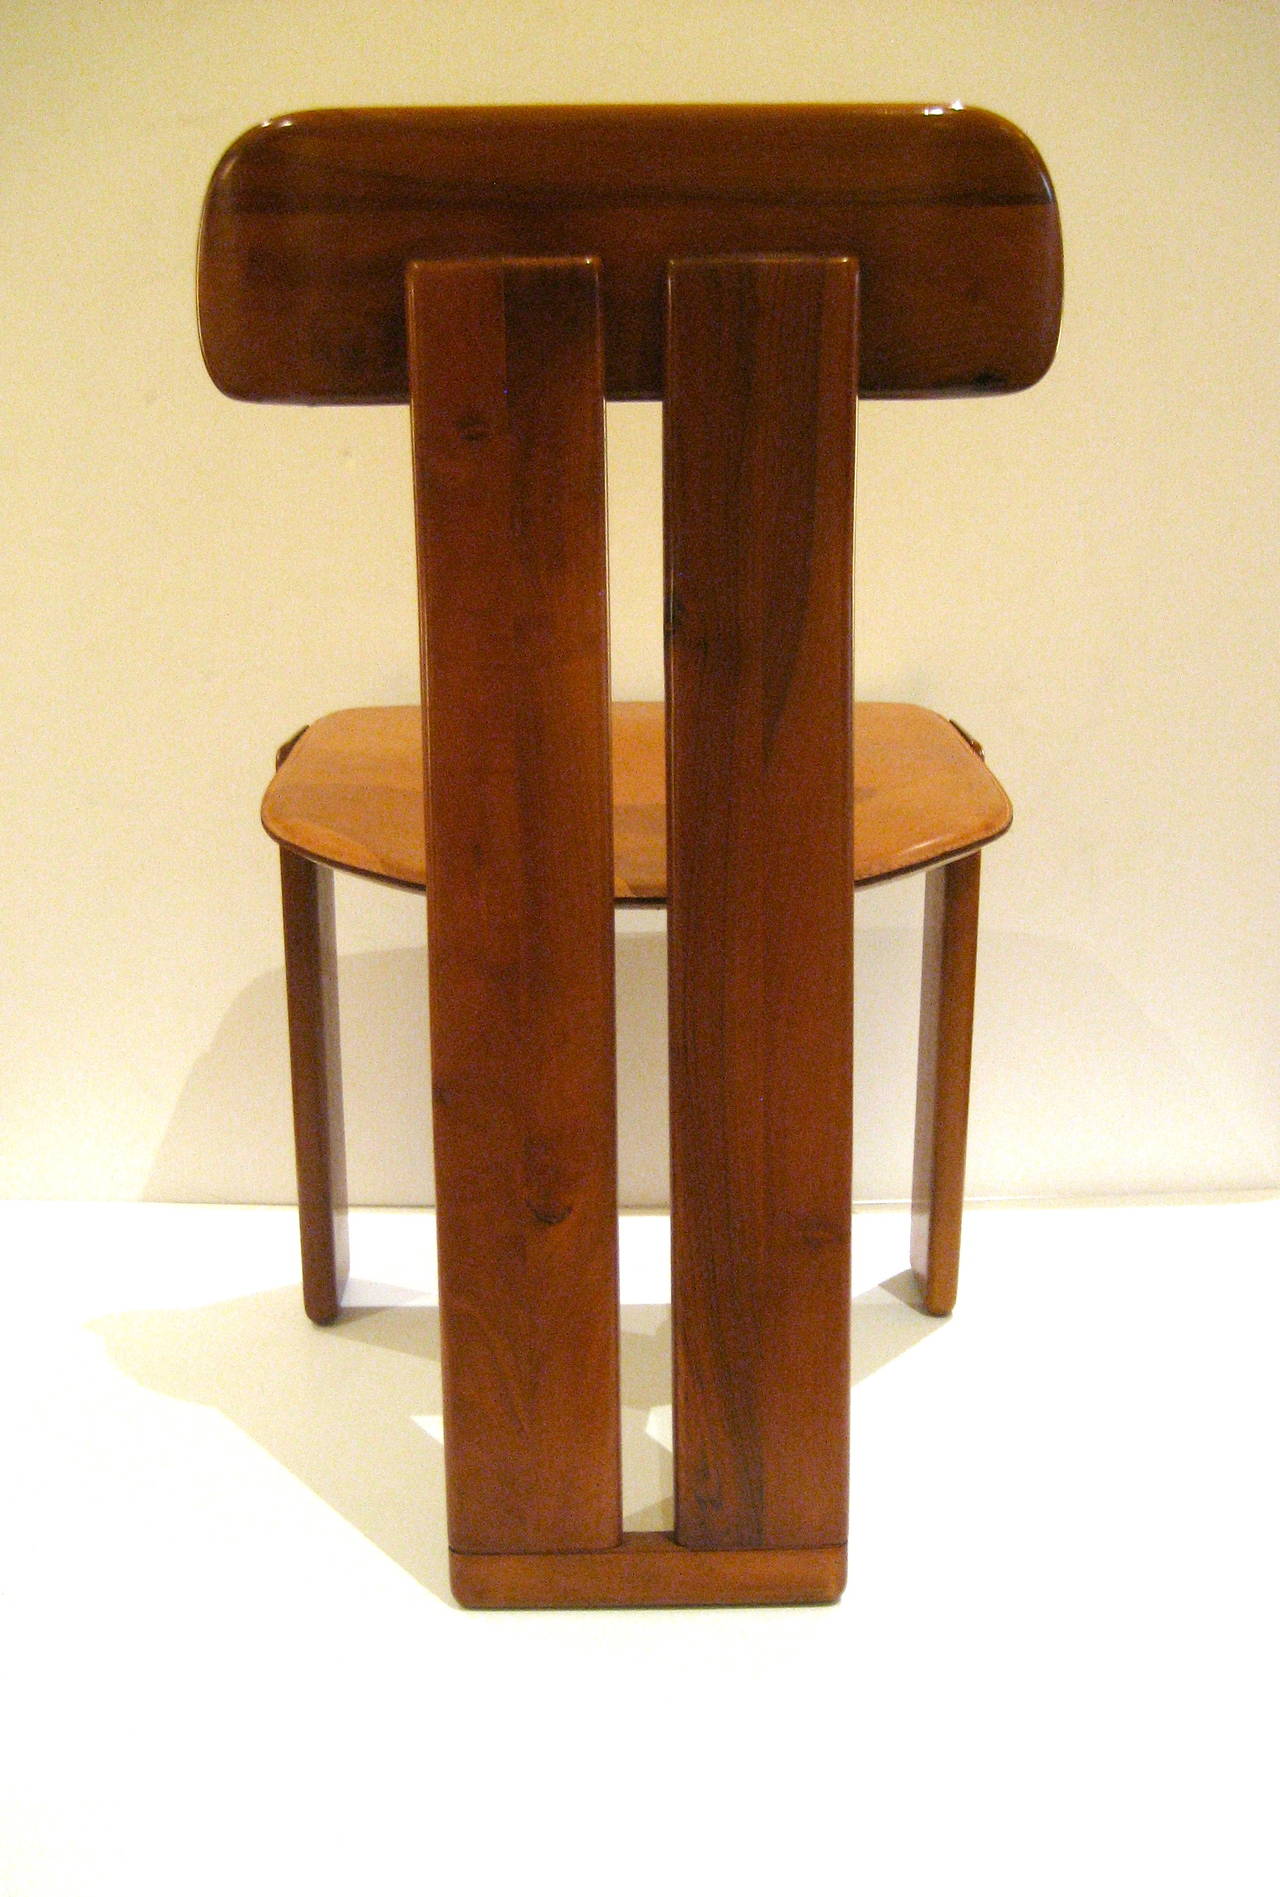 Scandinavian Modern Italian Modern Chairs by Tobia Scarpa Walnut and Leather Seat